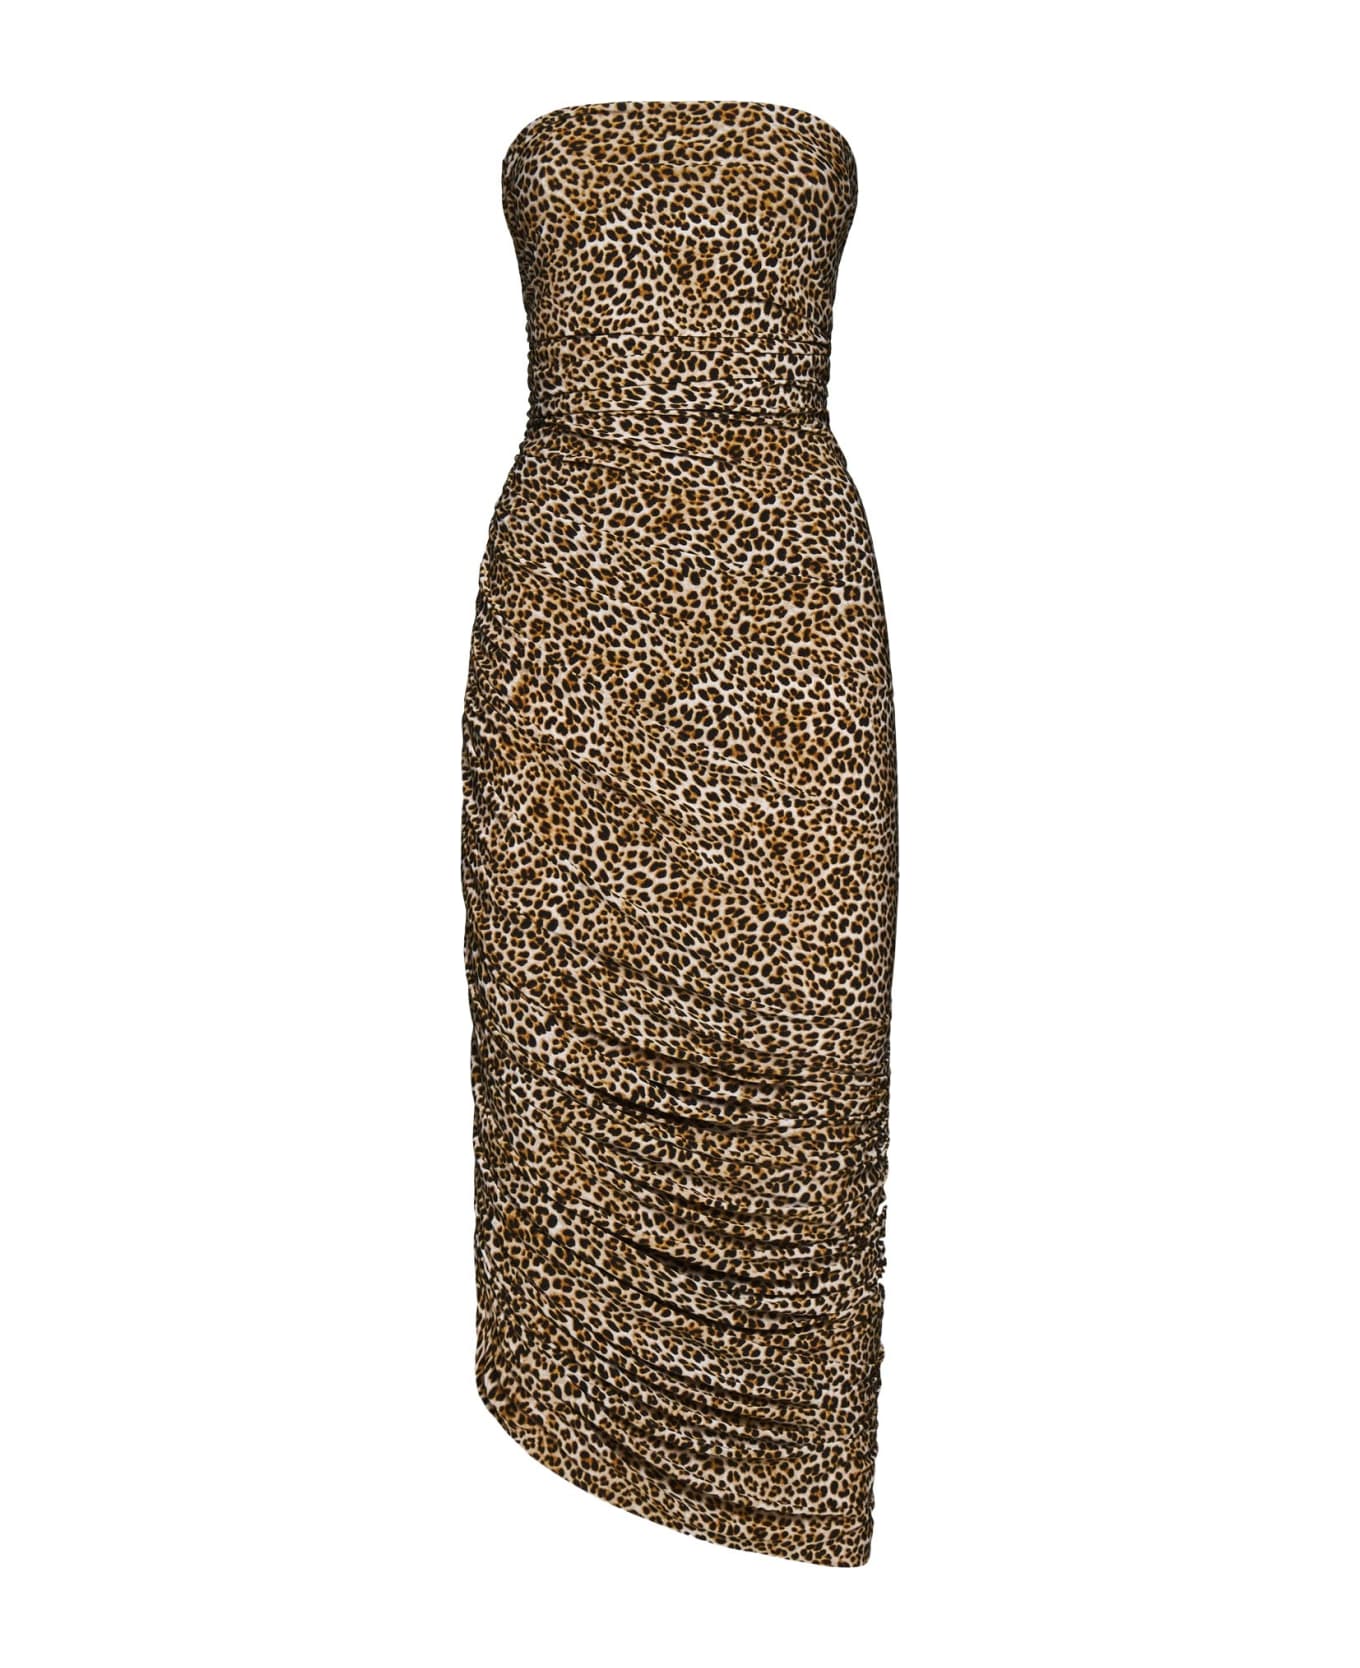 Norma Kamali Dress - Leopard